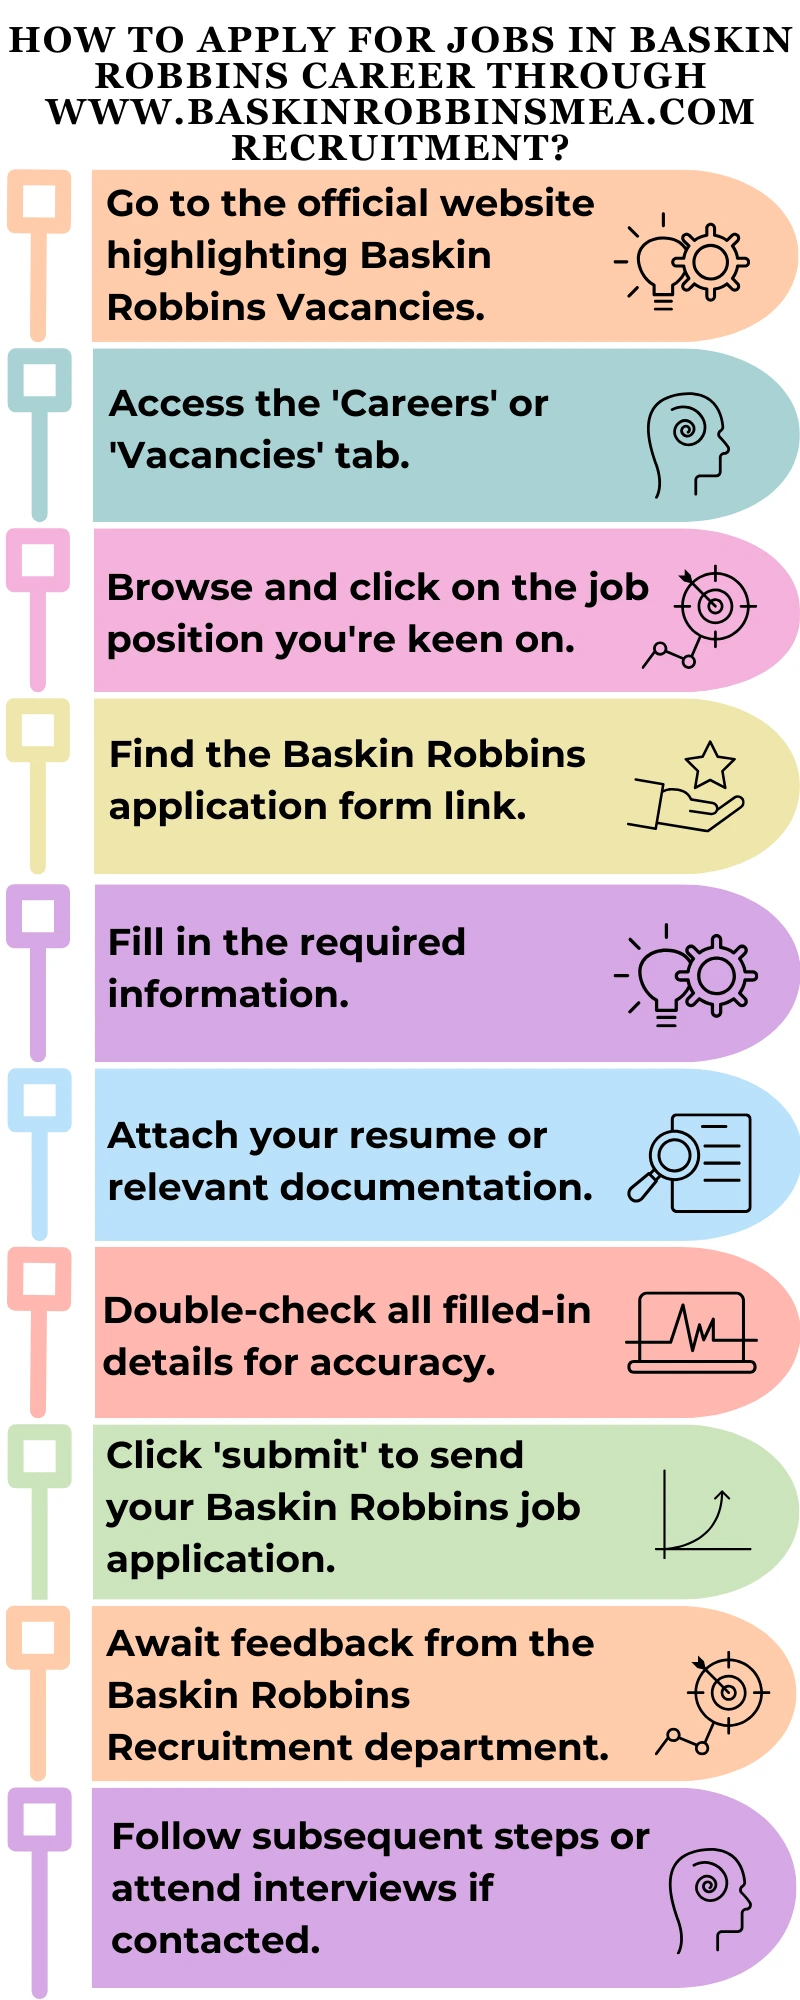 How to Apply for Jobs in Baskin Robbins Career through www.baskinrobbinsmea.com recruitment?